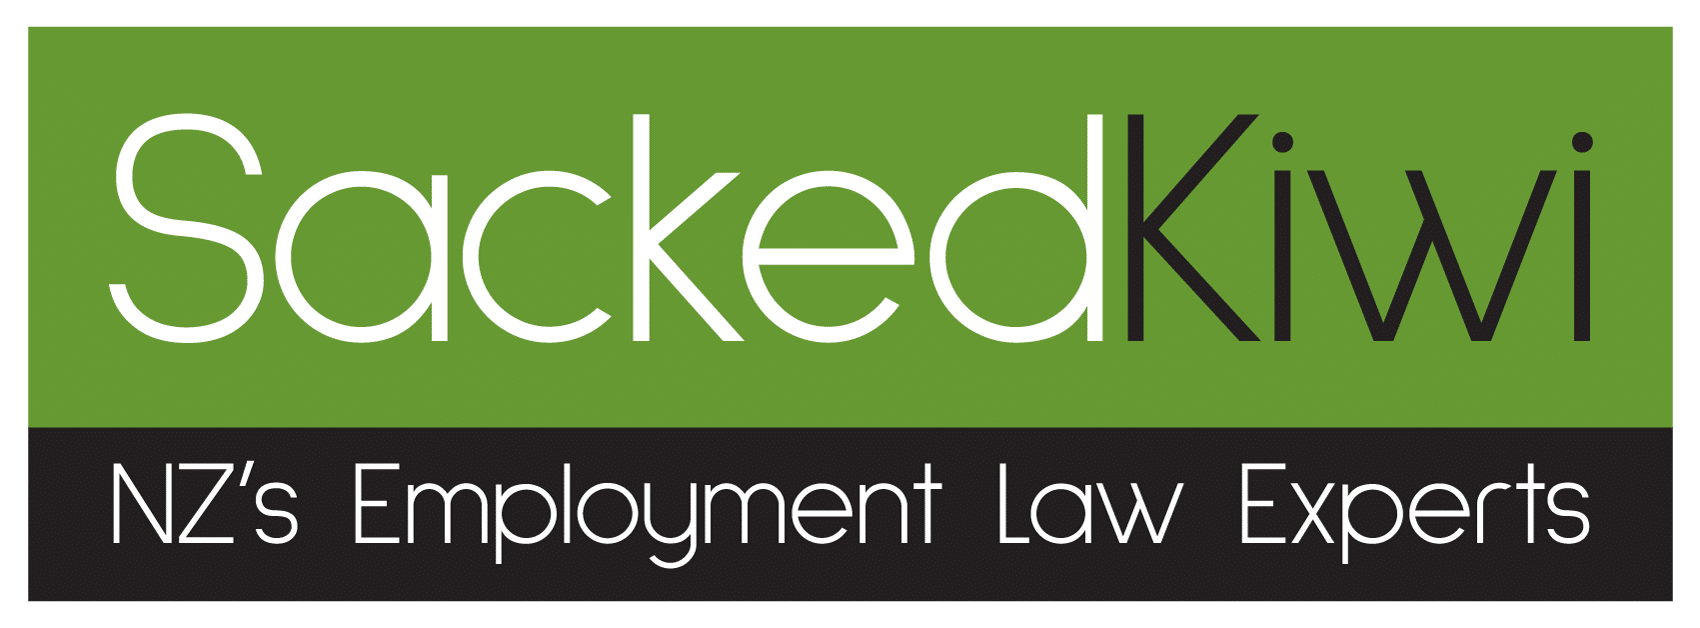 Sacked Kiwi NZ's Employment Law Experts green logo